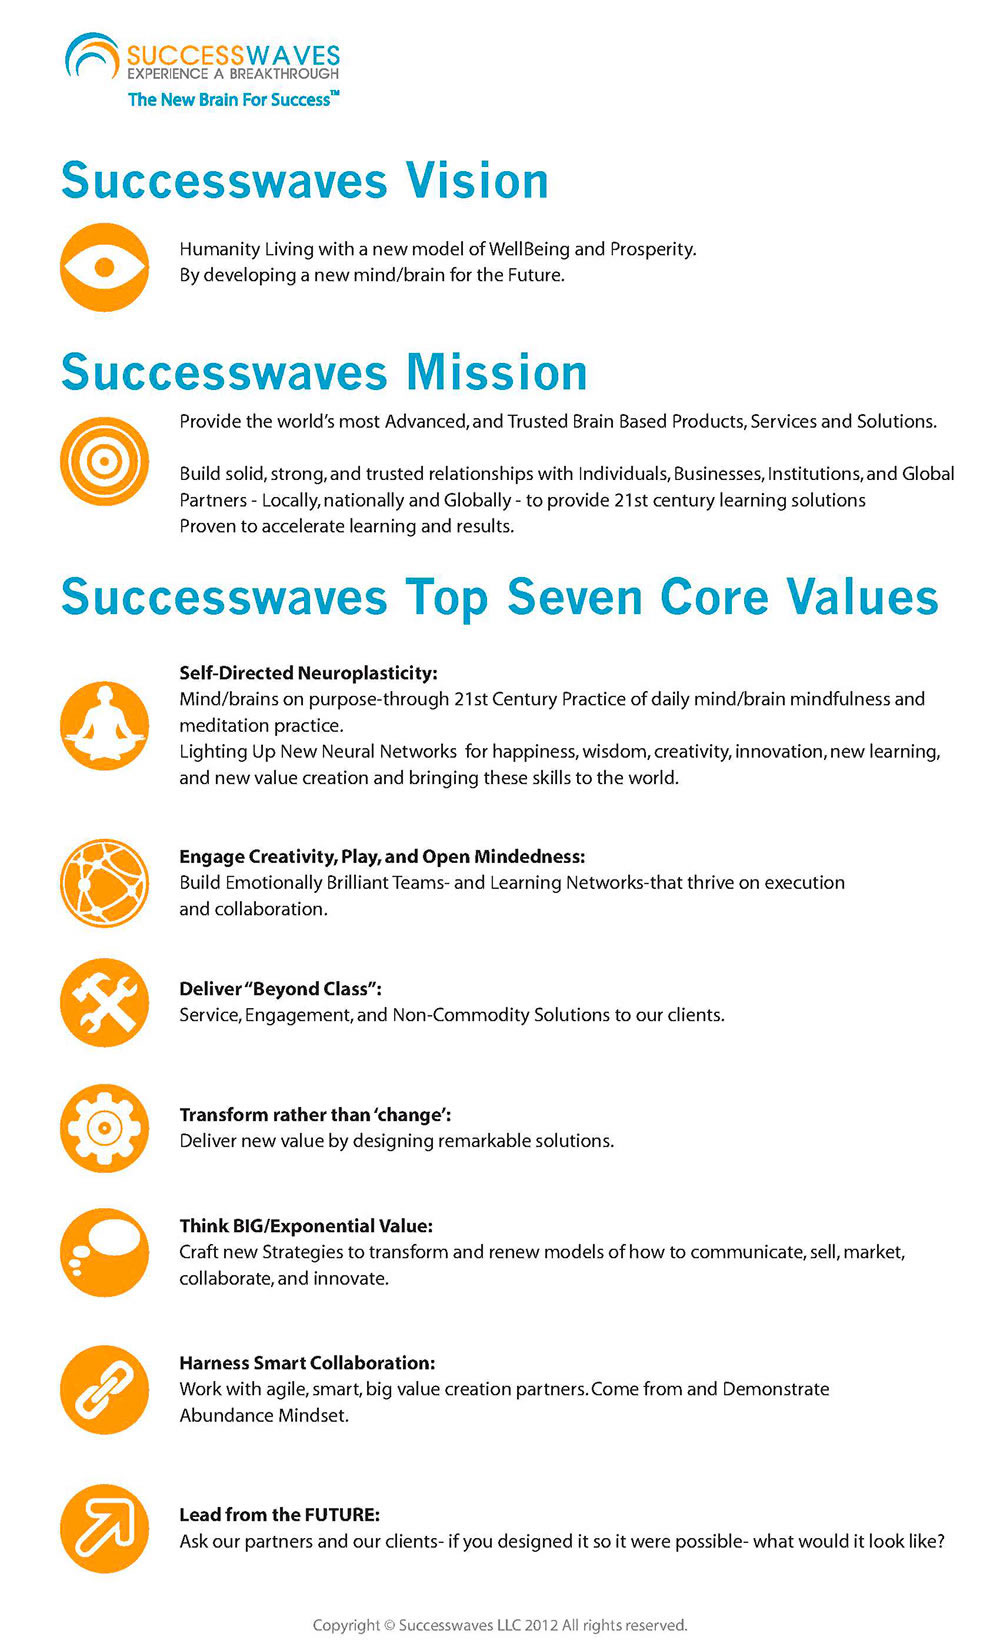 core-values-top-7-successwaves-brain-science-neuro-plasticity-coaching